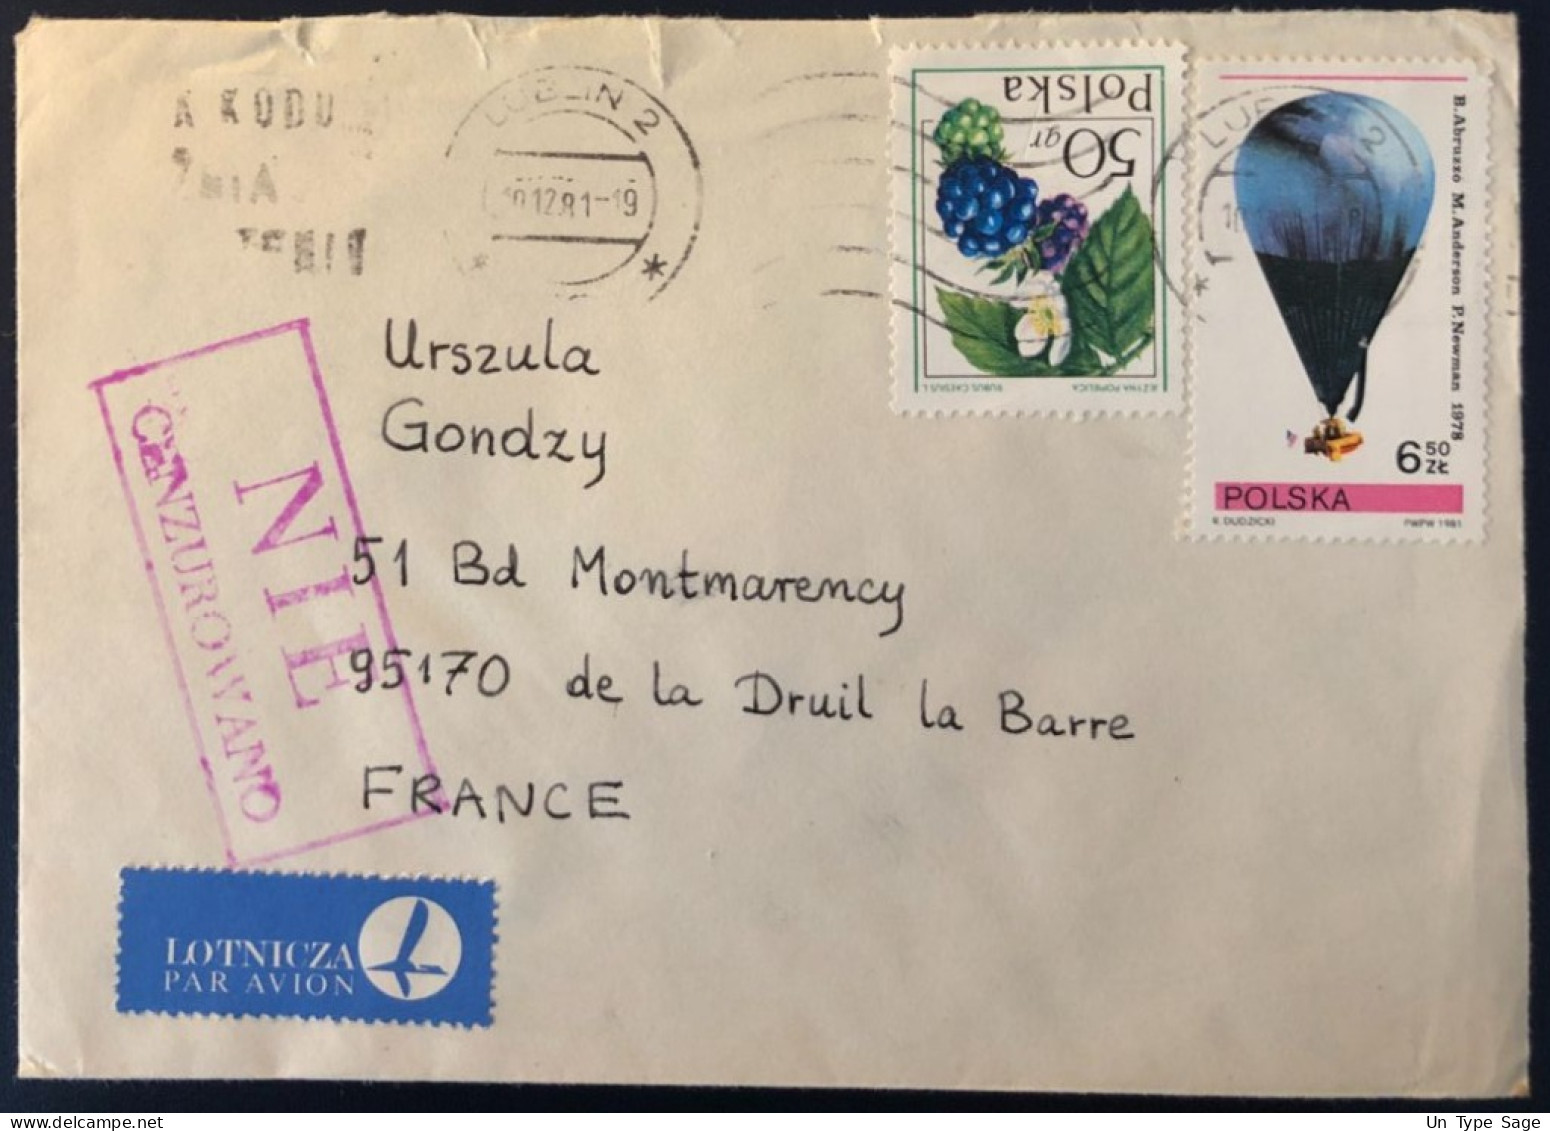 Pologne Divers Sur Enveloppe 10.12.1981 + Griffe NIE CENZUROWANO - (B1940) - Briefe U. Dokumente